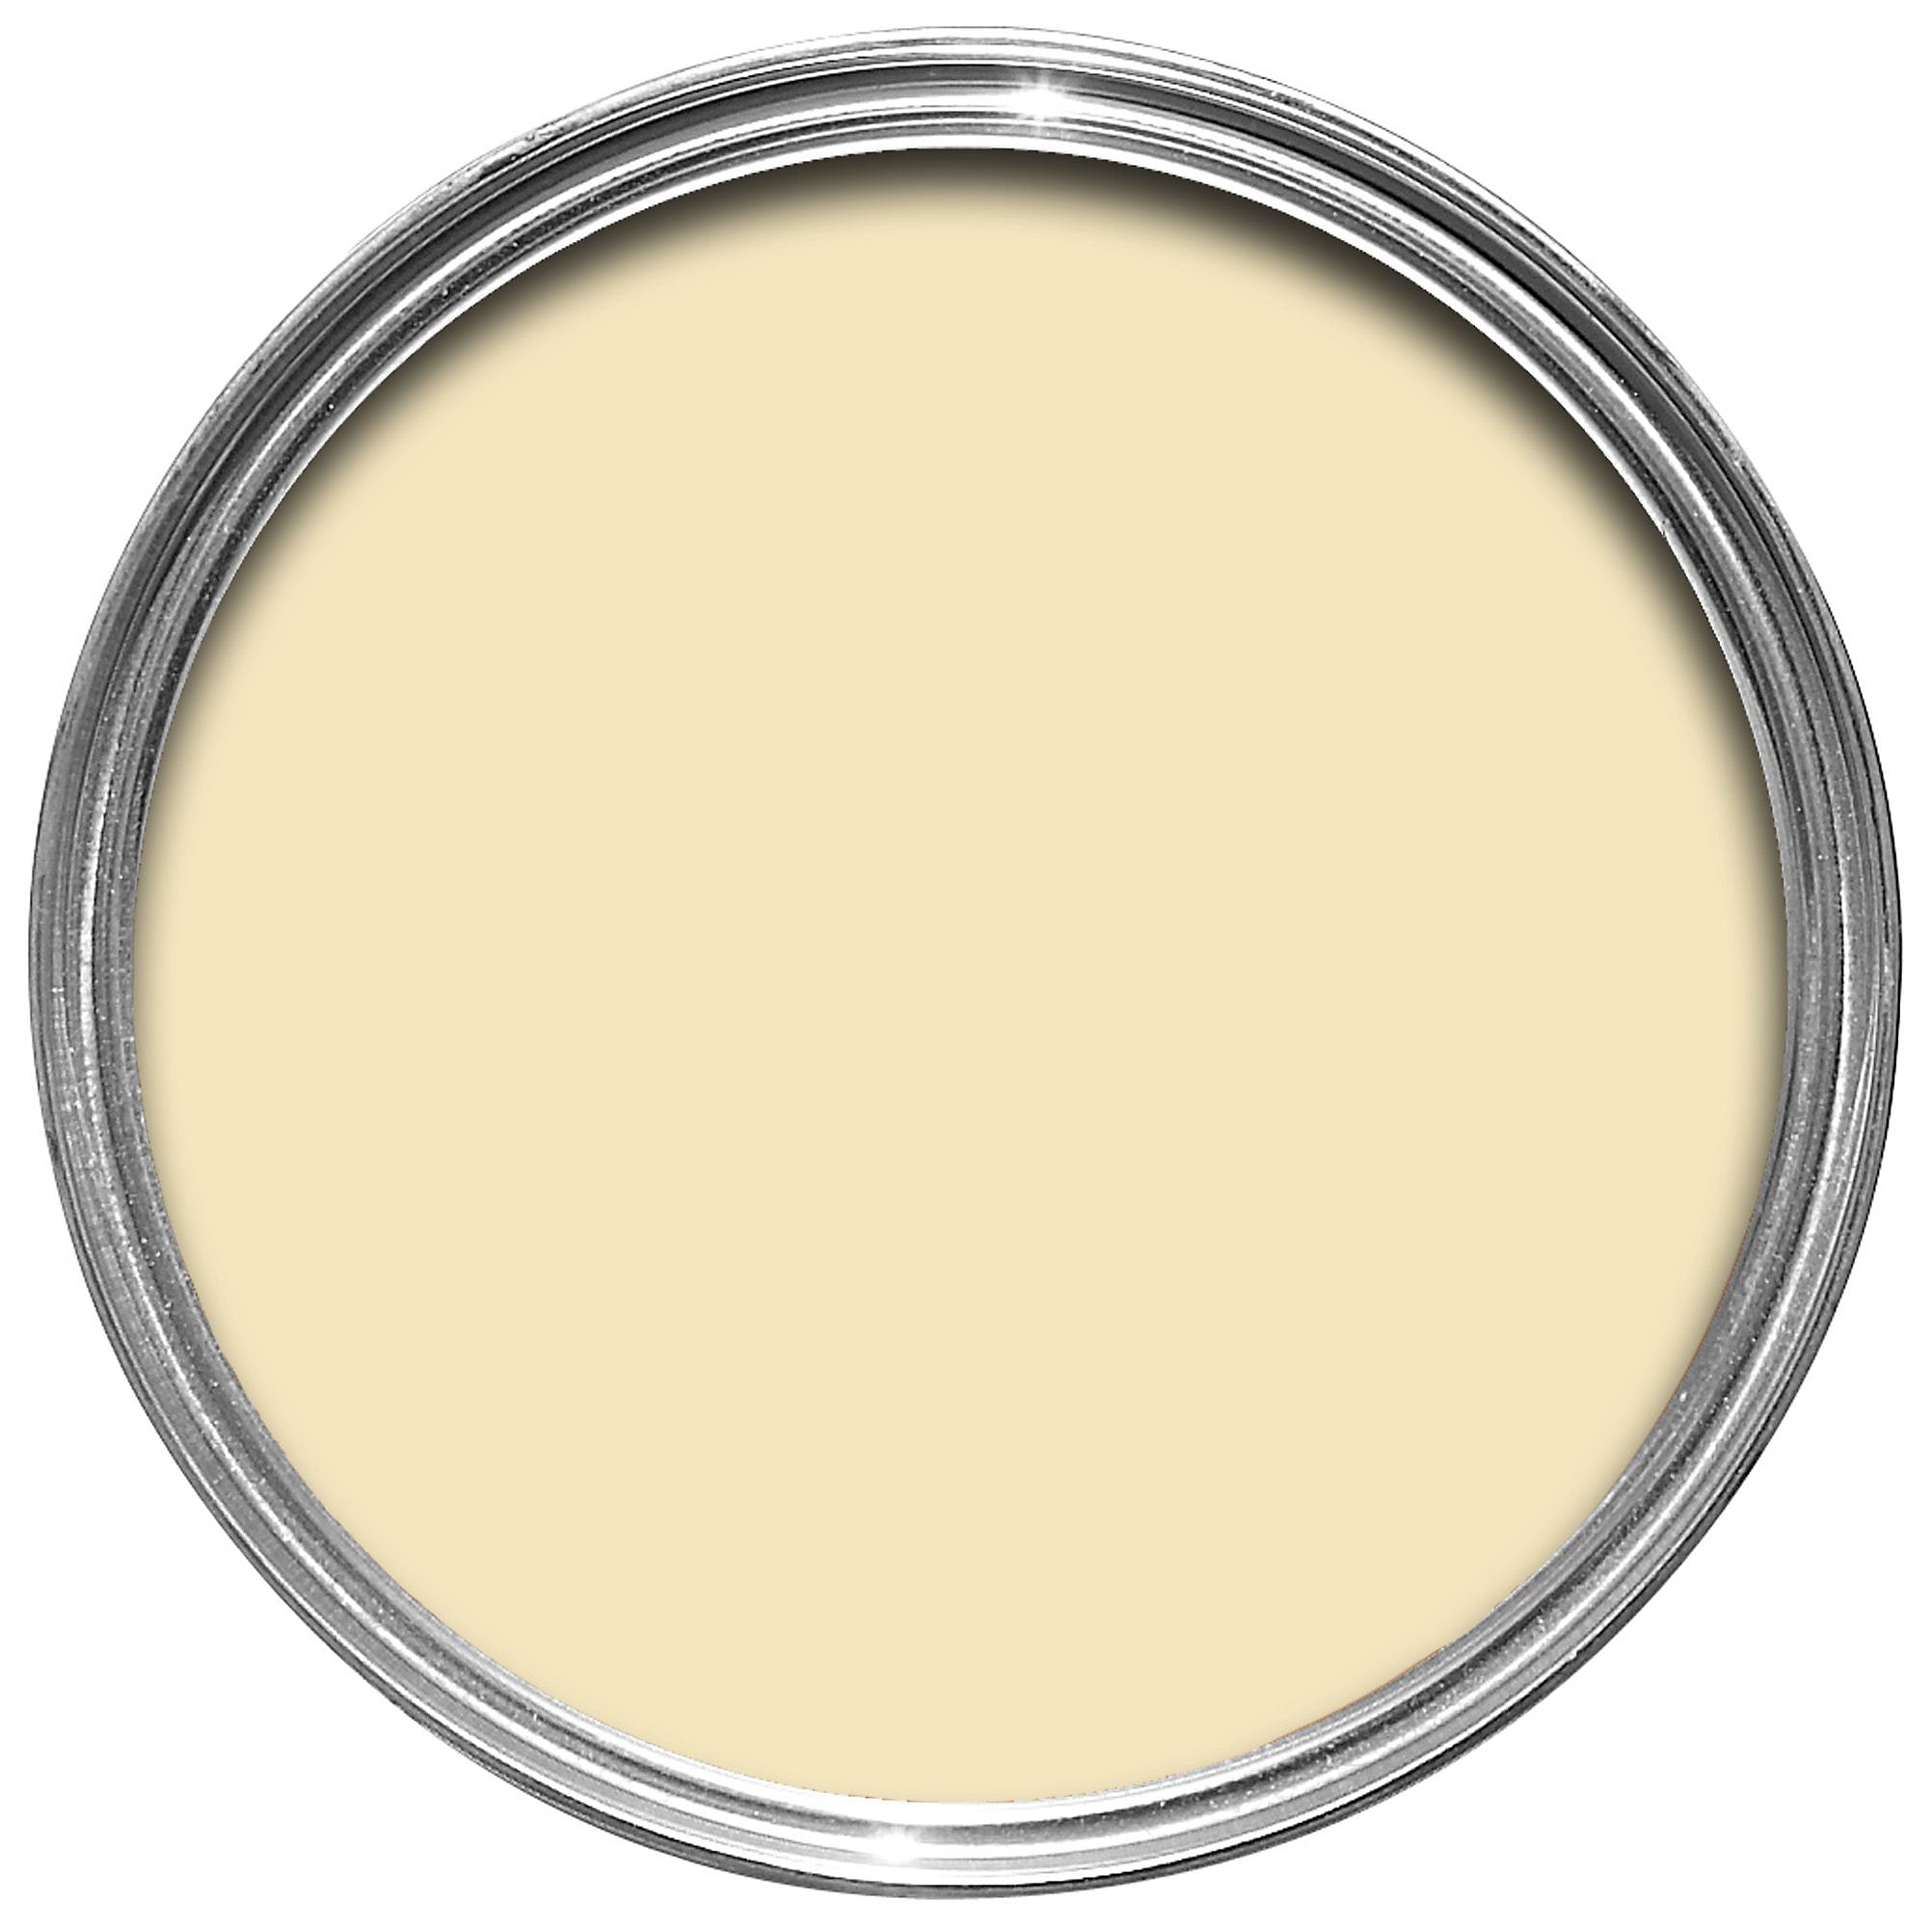 Rust-Oleum-Furniture paint-cream Chalky effectt-125ml-1110